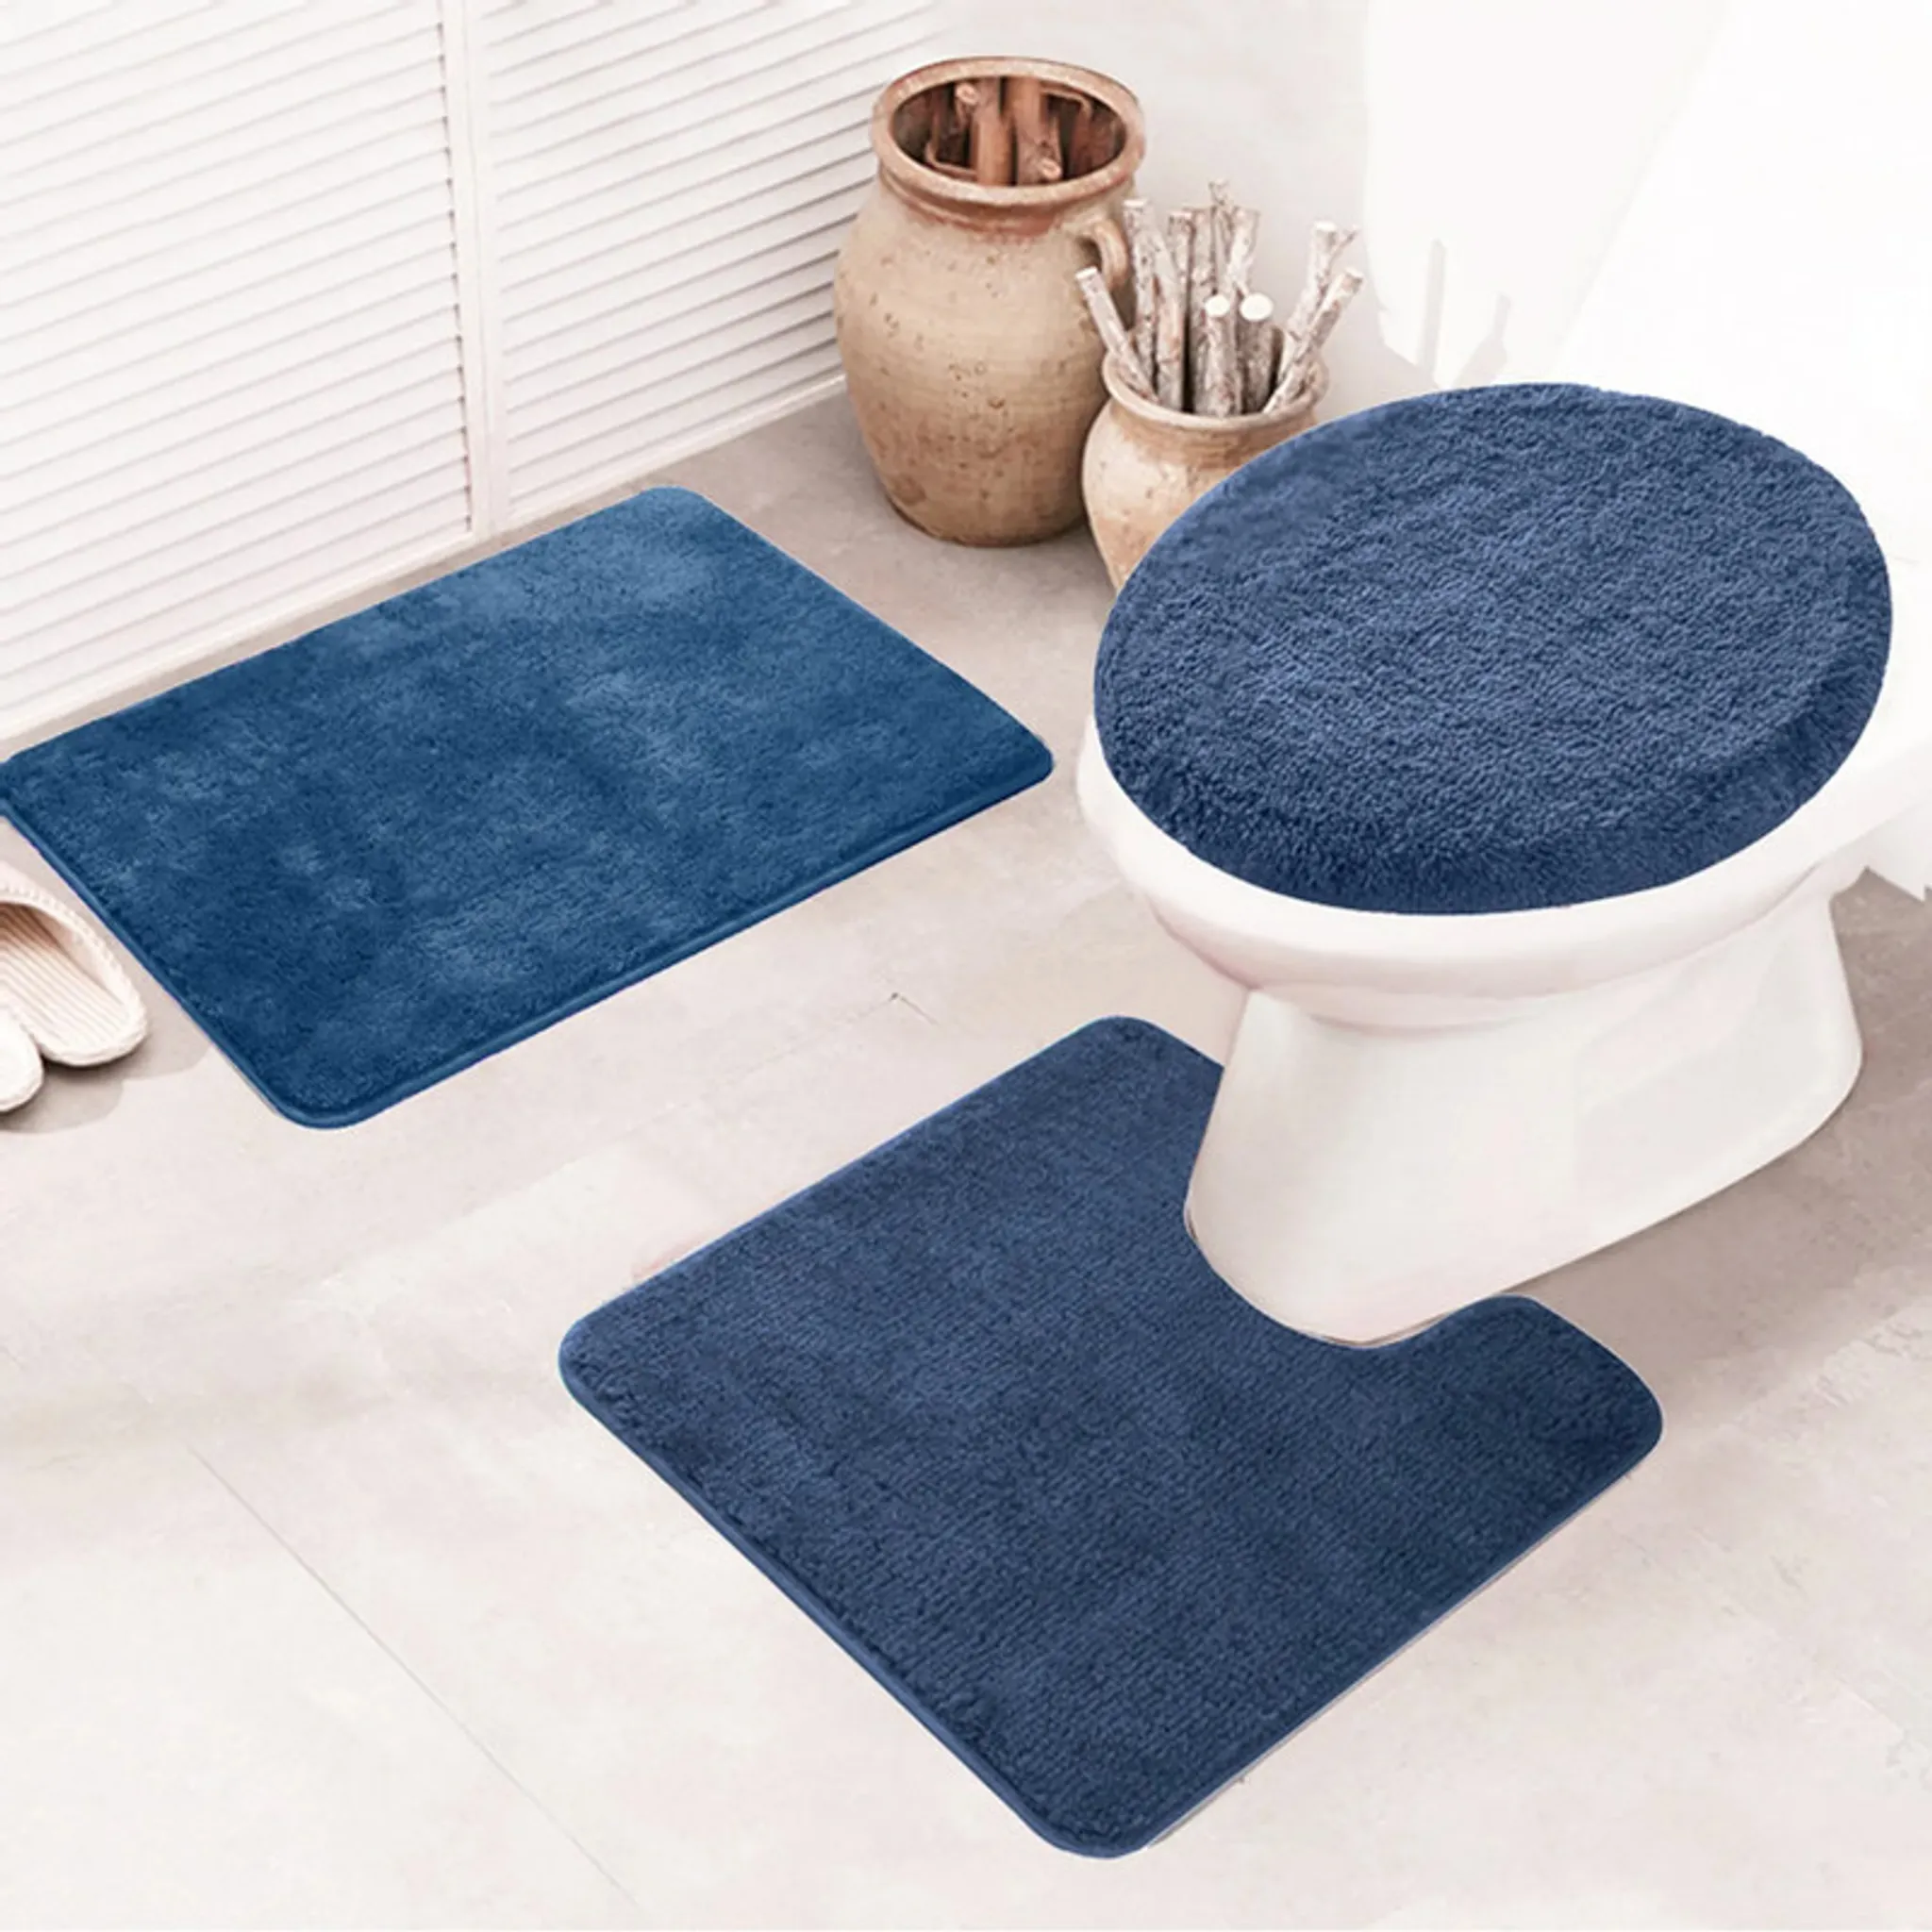 3 Stück Badezimmer Teppich Matten Set Toiletten Deckel Abdeckung